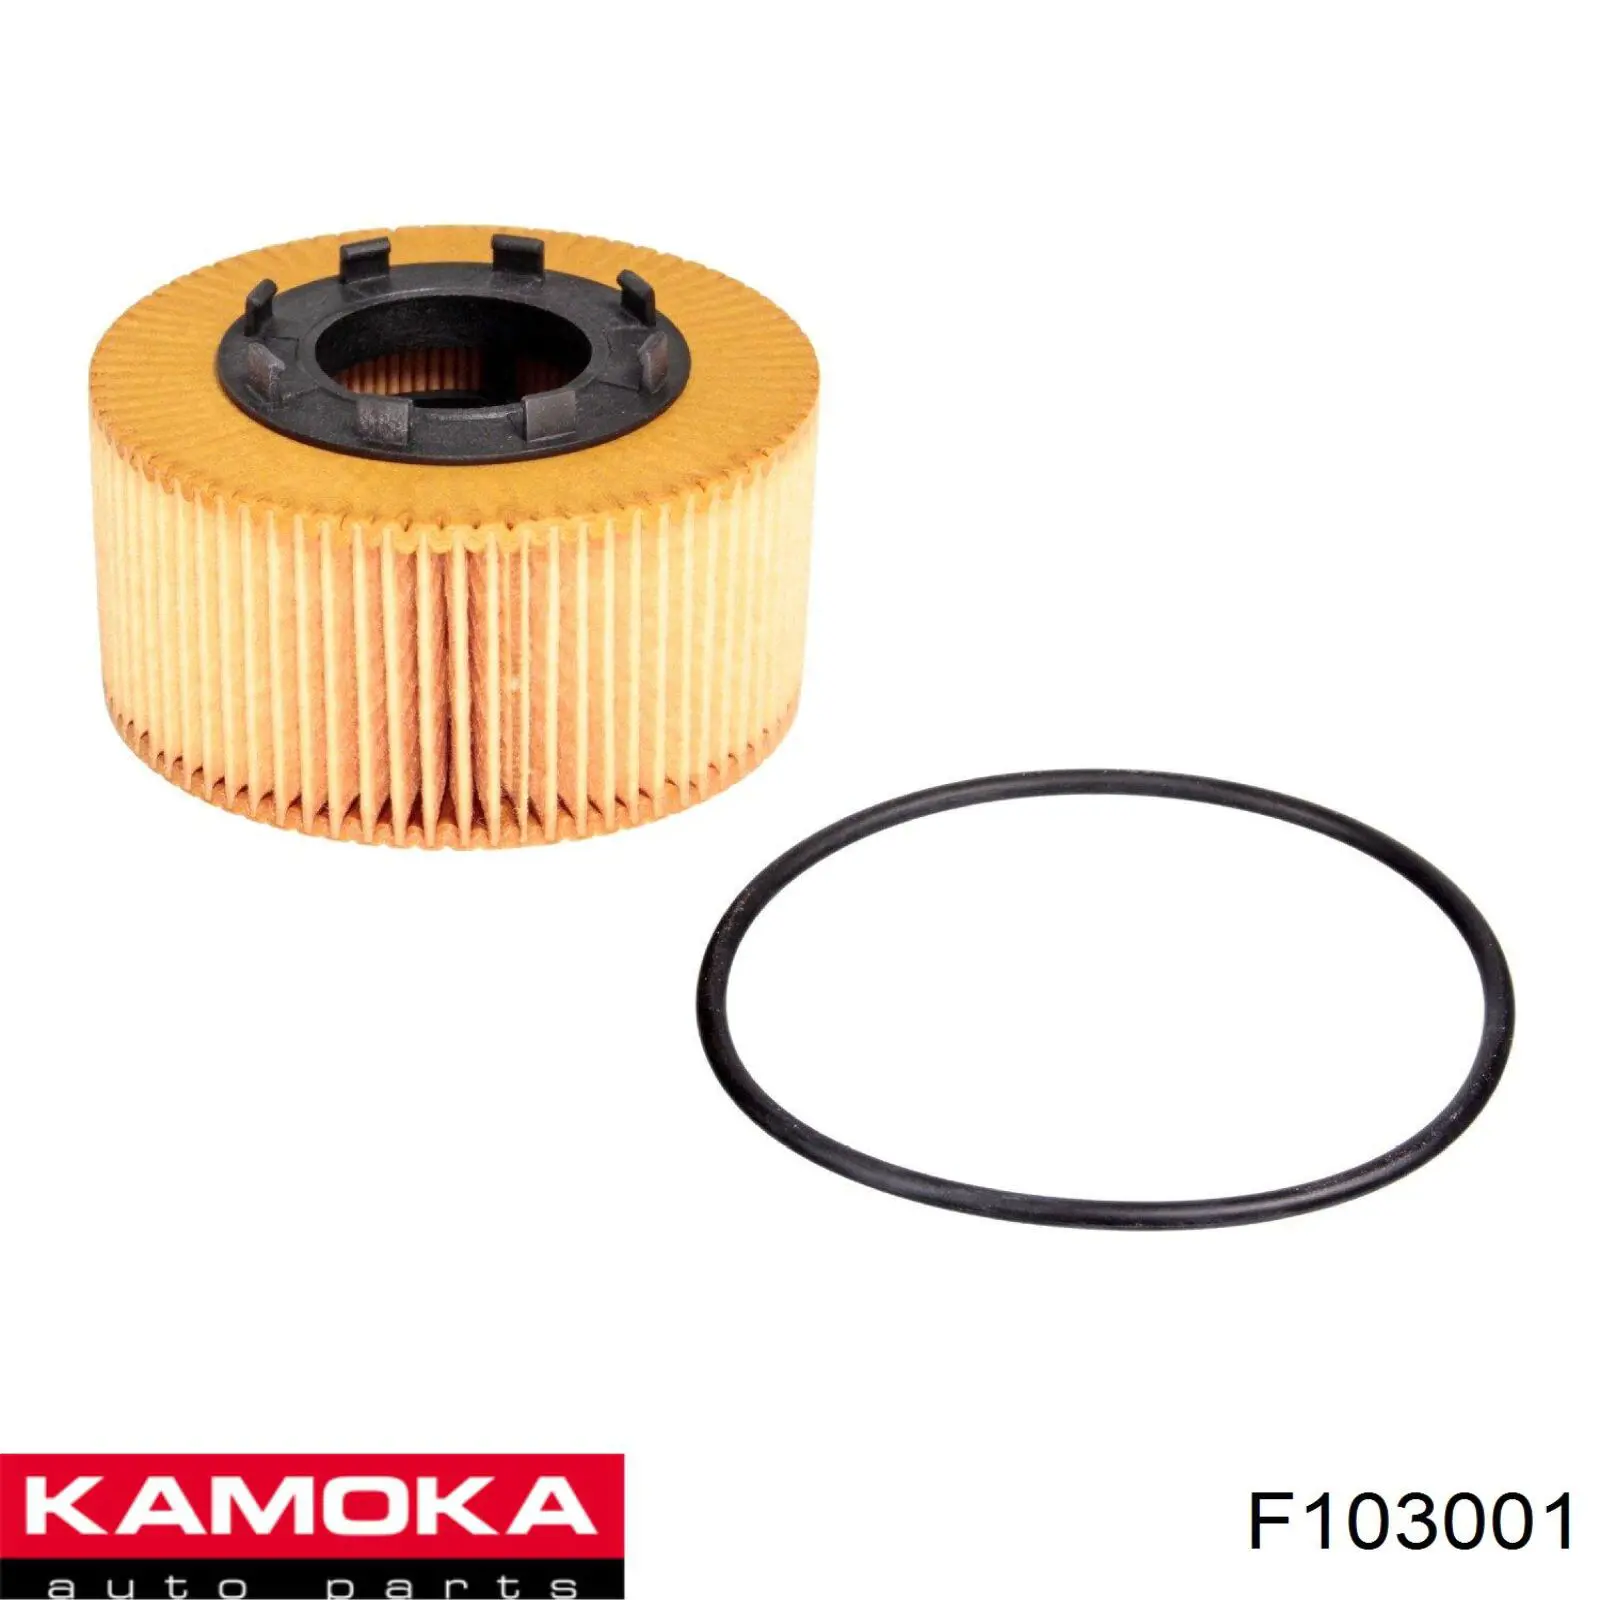 F103001 Kamoka filtro de aceite